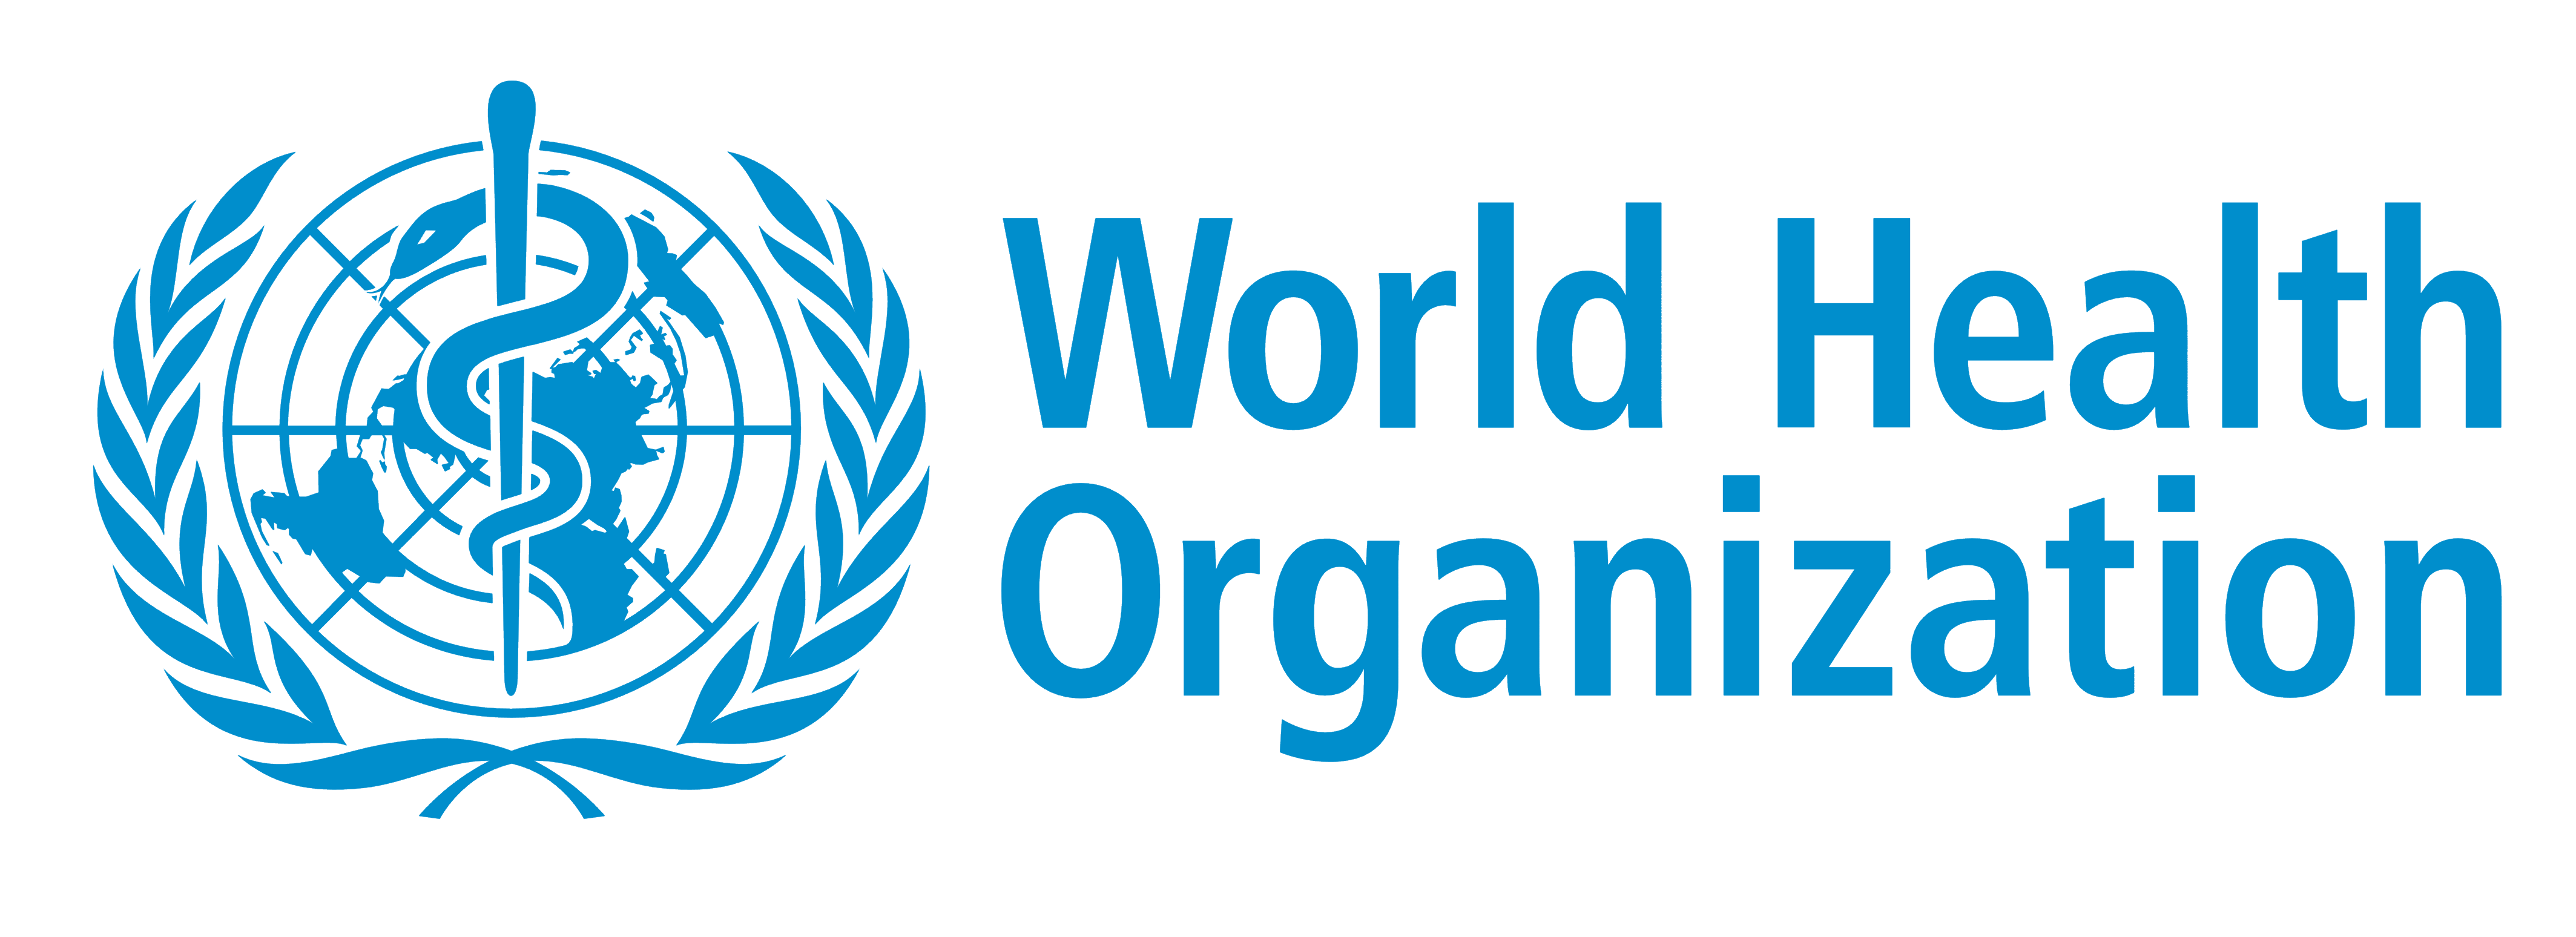 World Health Organization logo, logotype